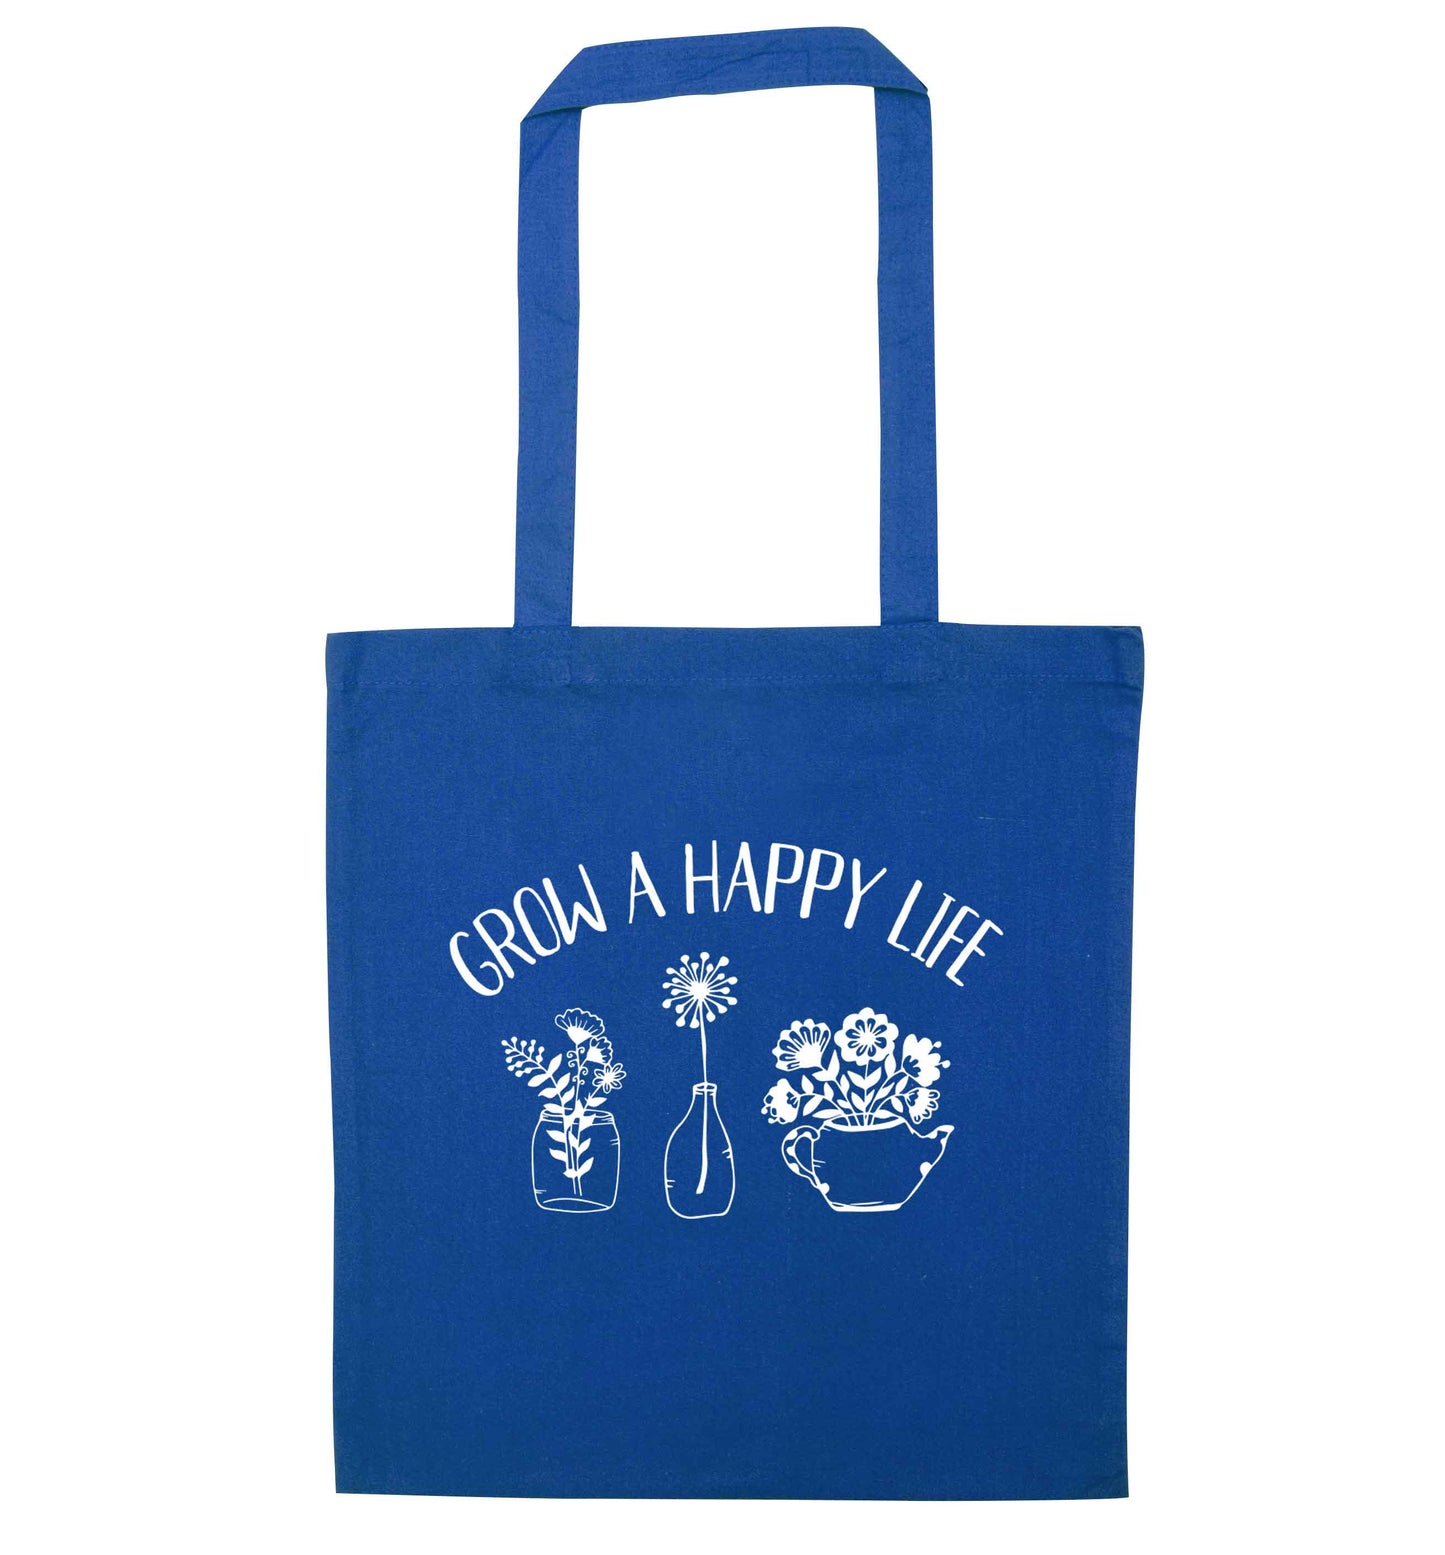 Grow a happy life blue tote bag